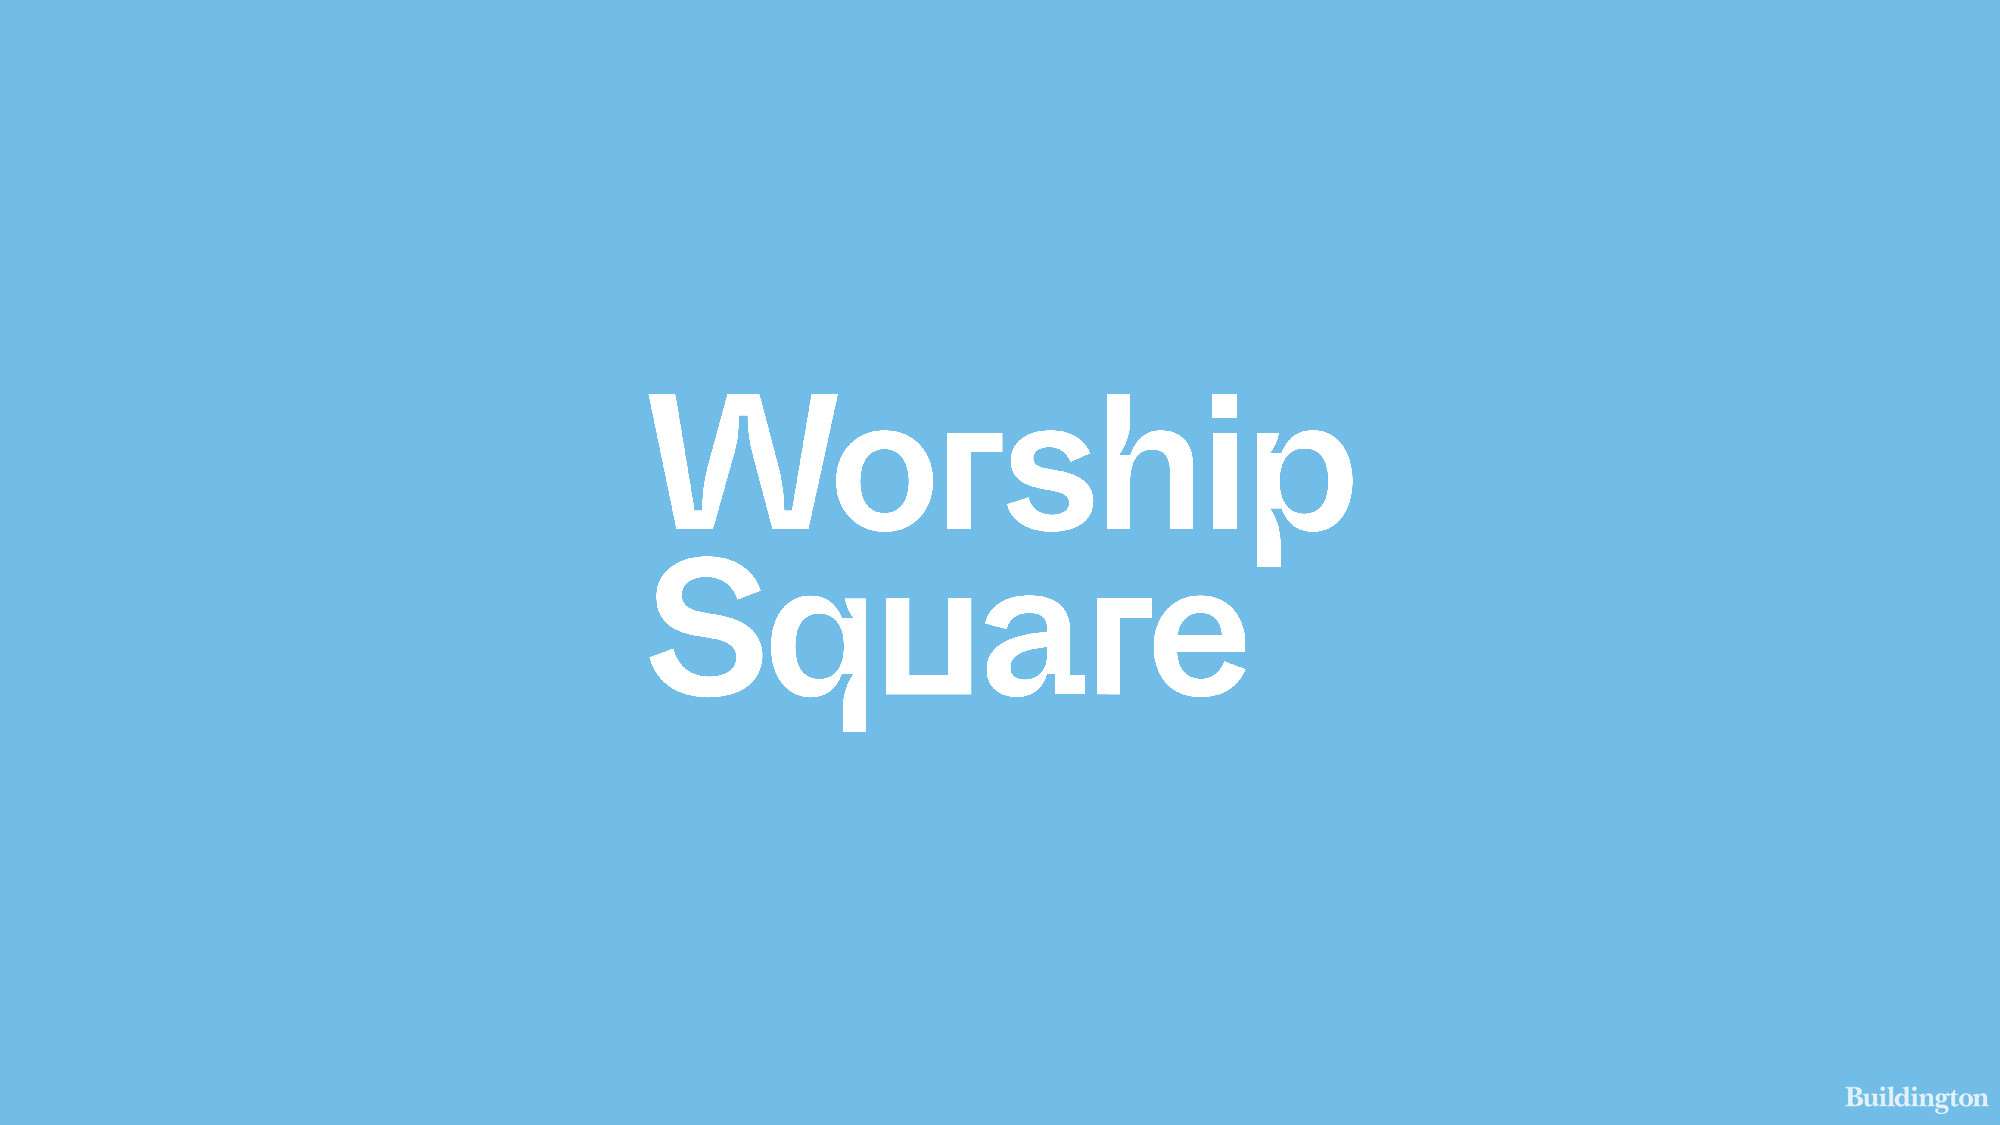 Worship Square development logo